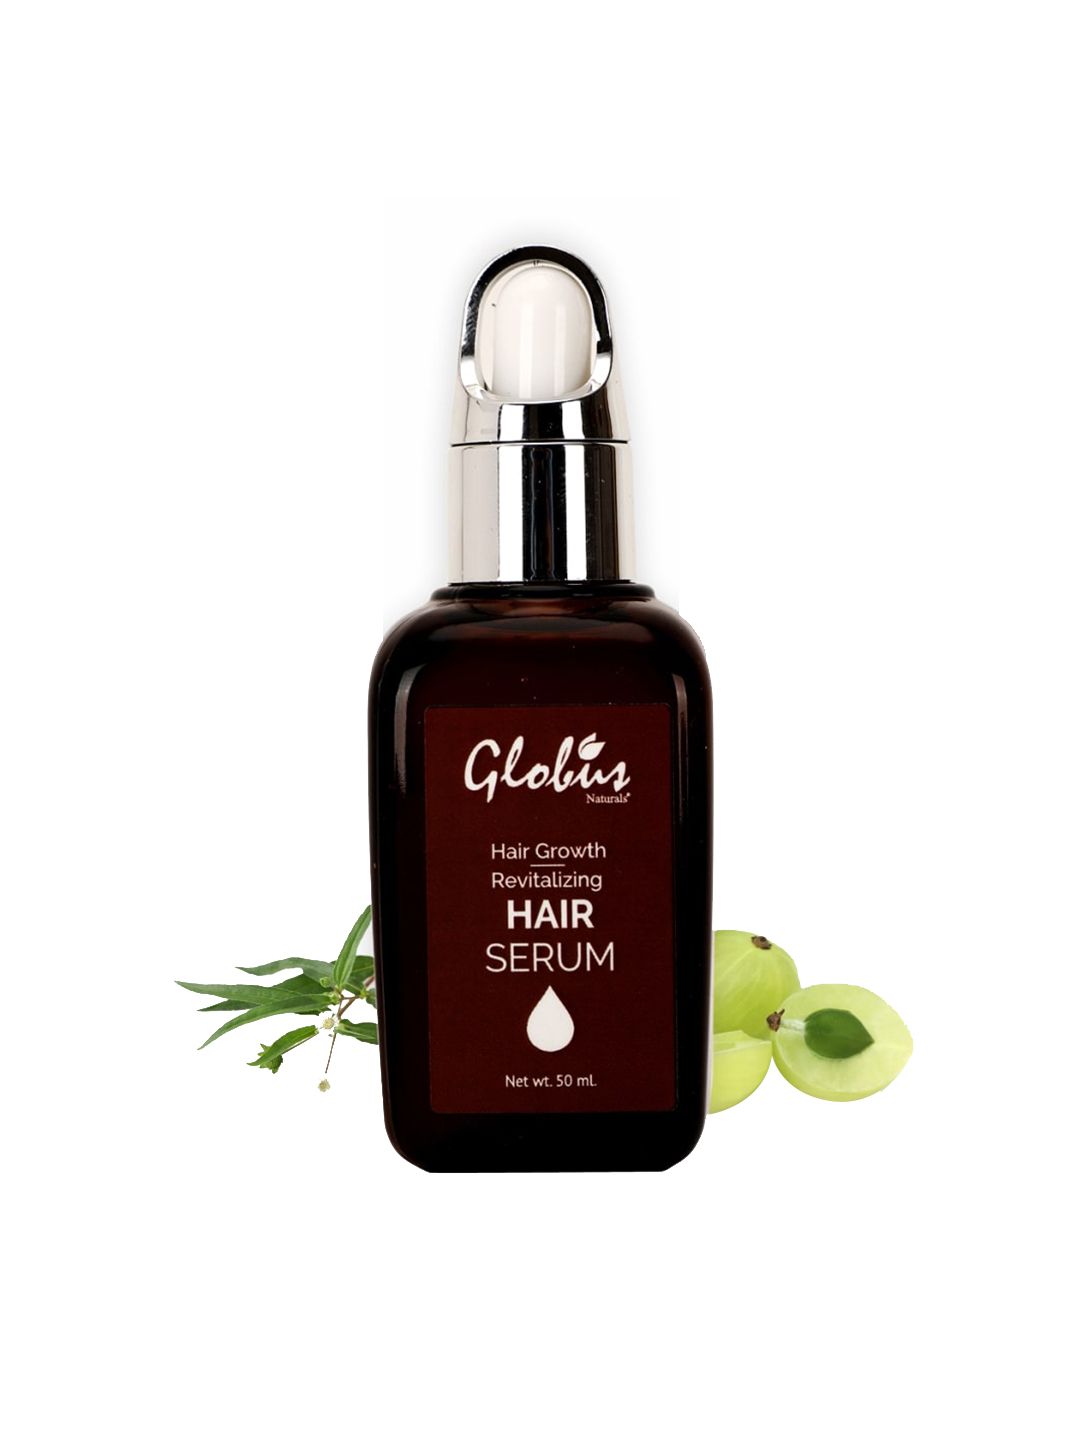 Globus Naturals  Hair Growth & Revitalizing Hair Serum 50 ml Price in India